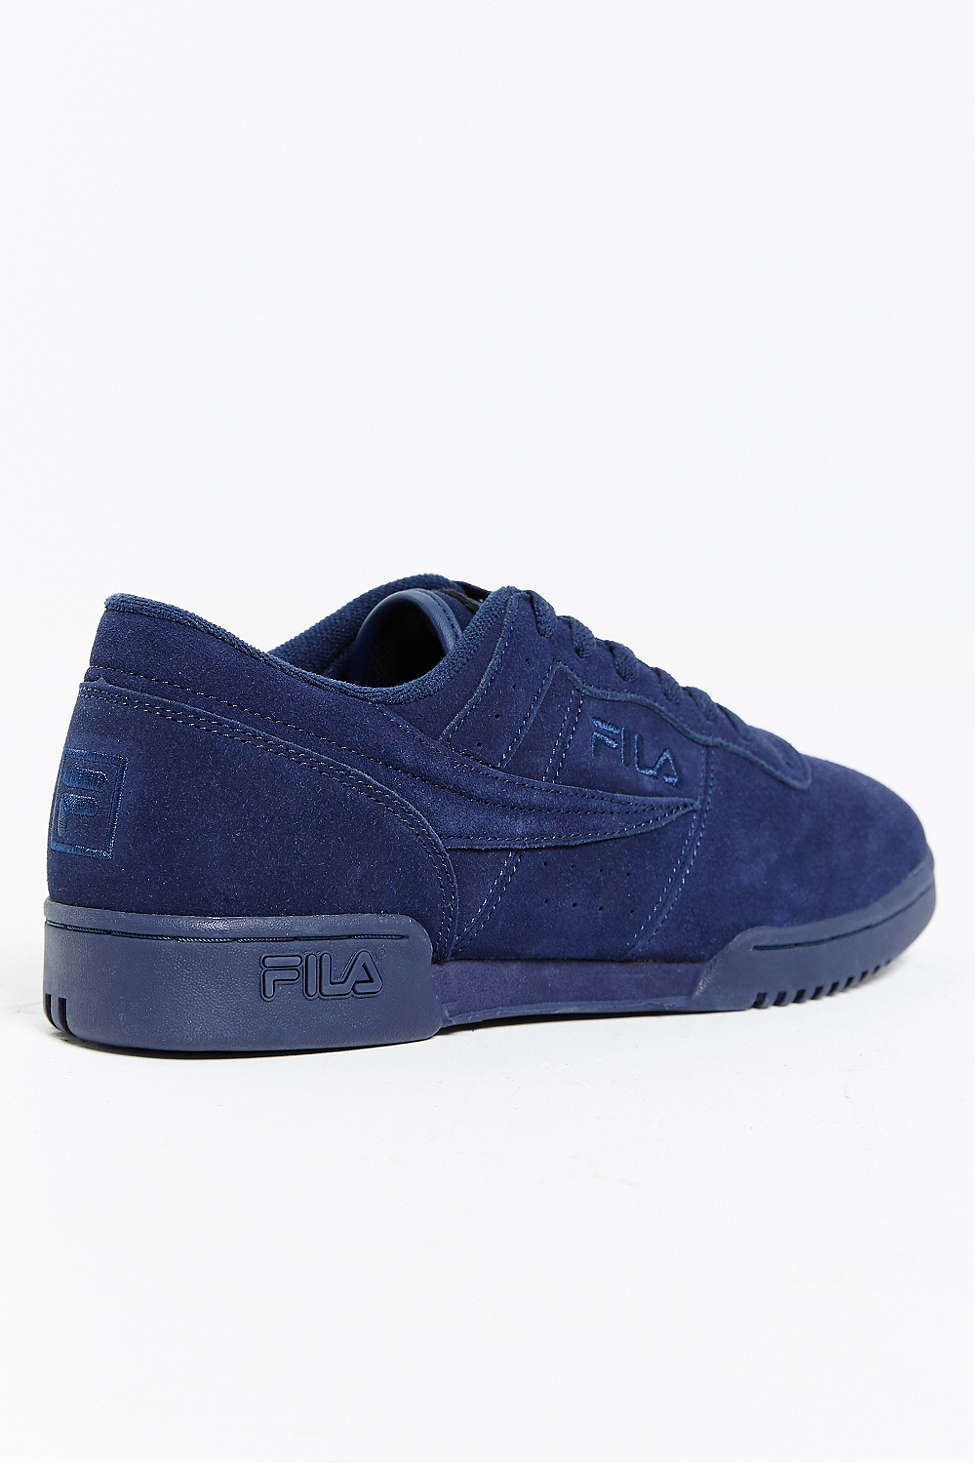 Fila Original Fitness Suede Sneaker in Navy (Blue) for Men - Lyst